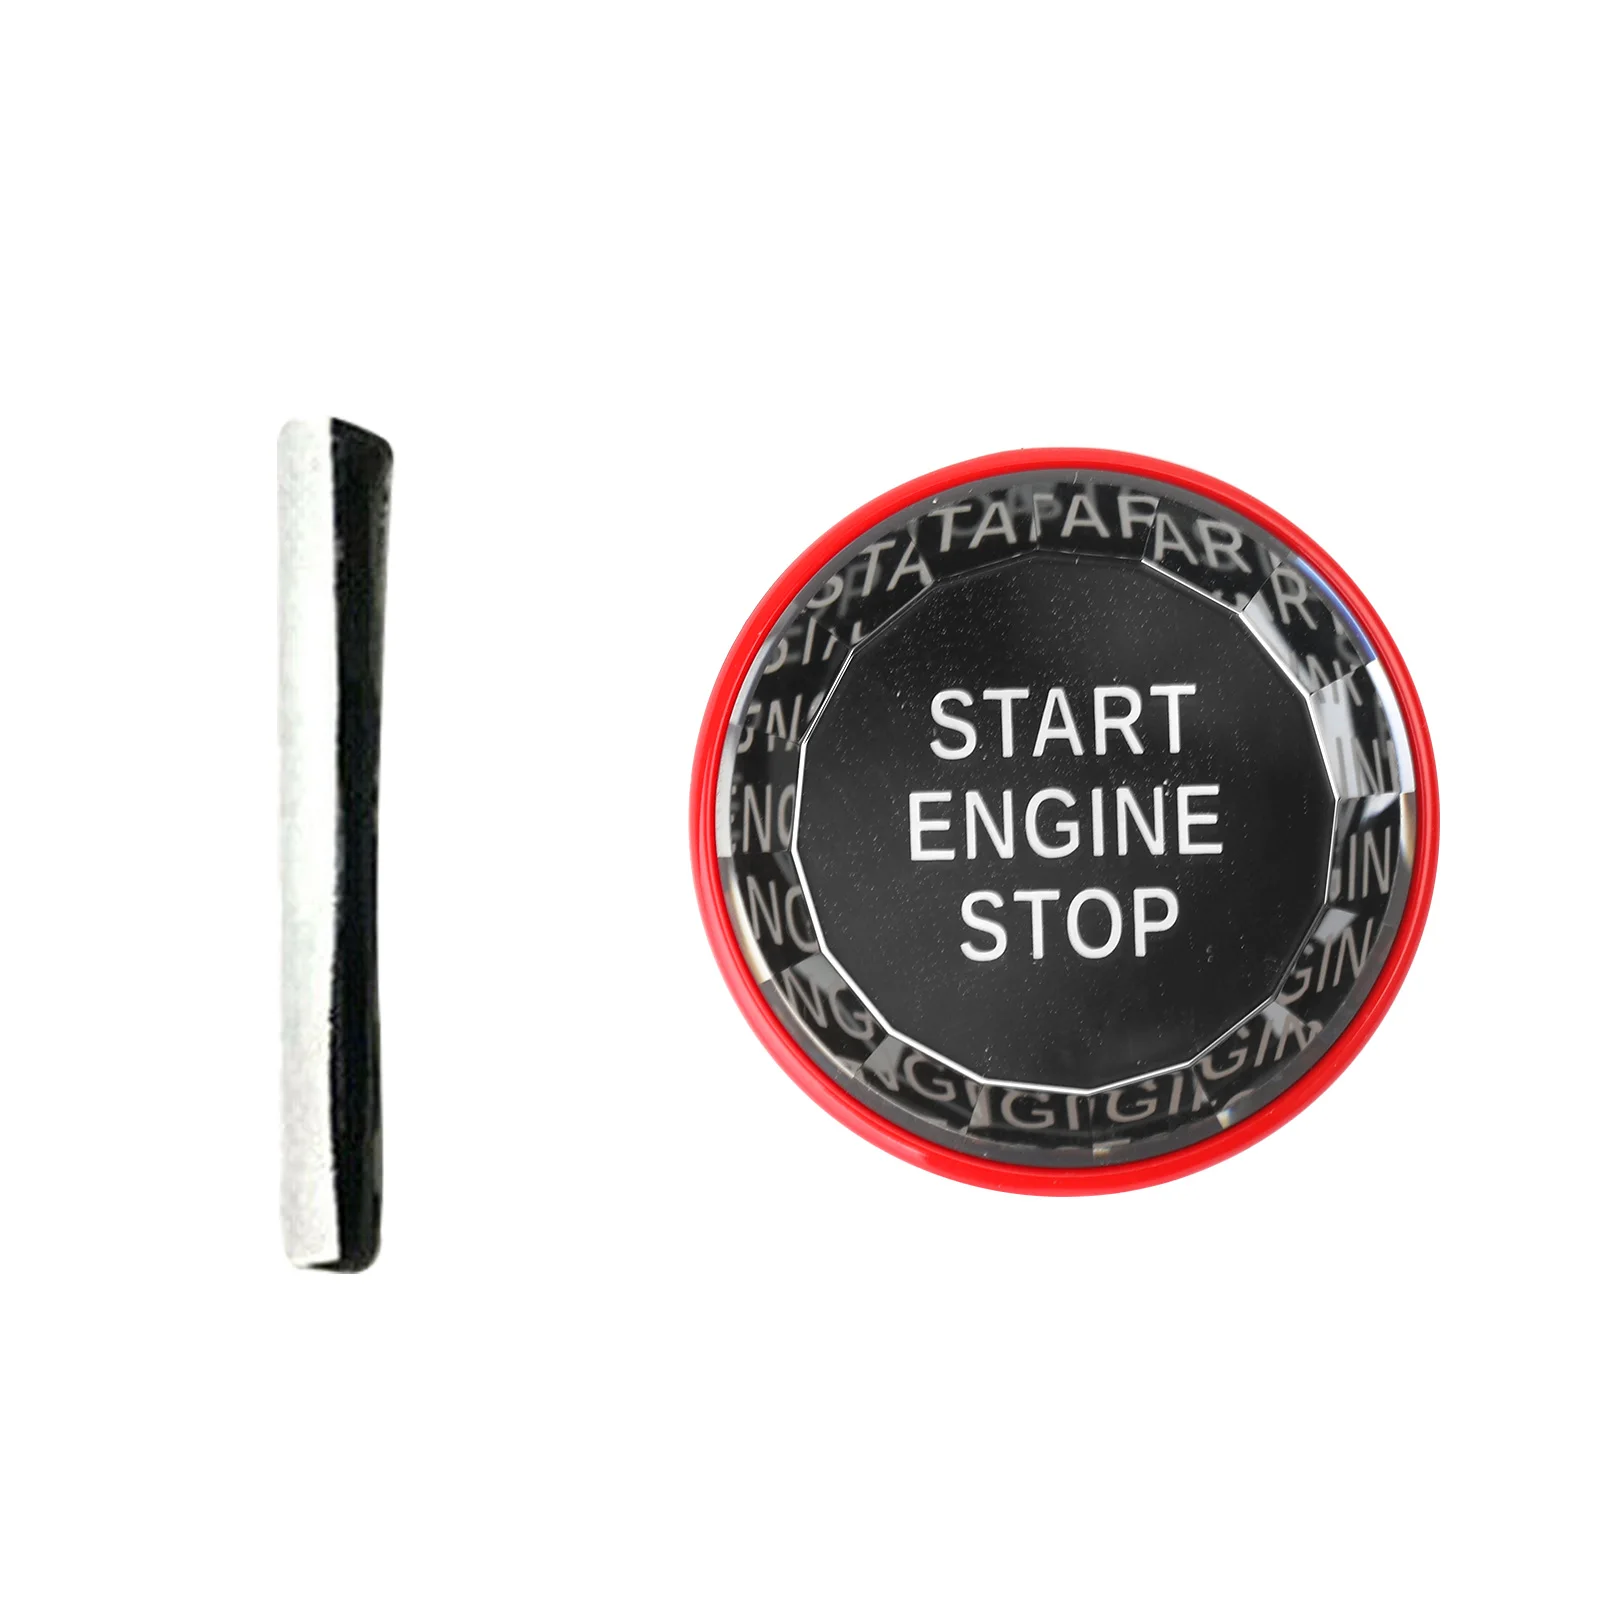 

Areyourshop Red Start Stop Engine Button Crystal For BMW E Chassis E90 E92 E93 E64 E46 E60, As the picture shows